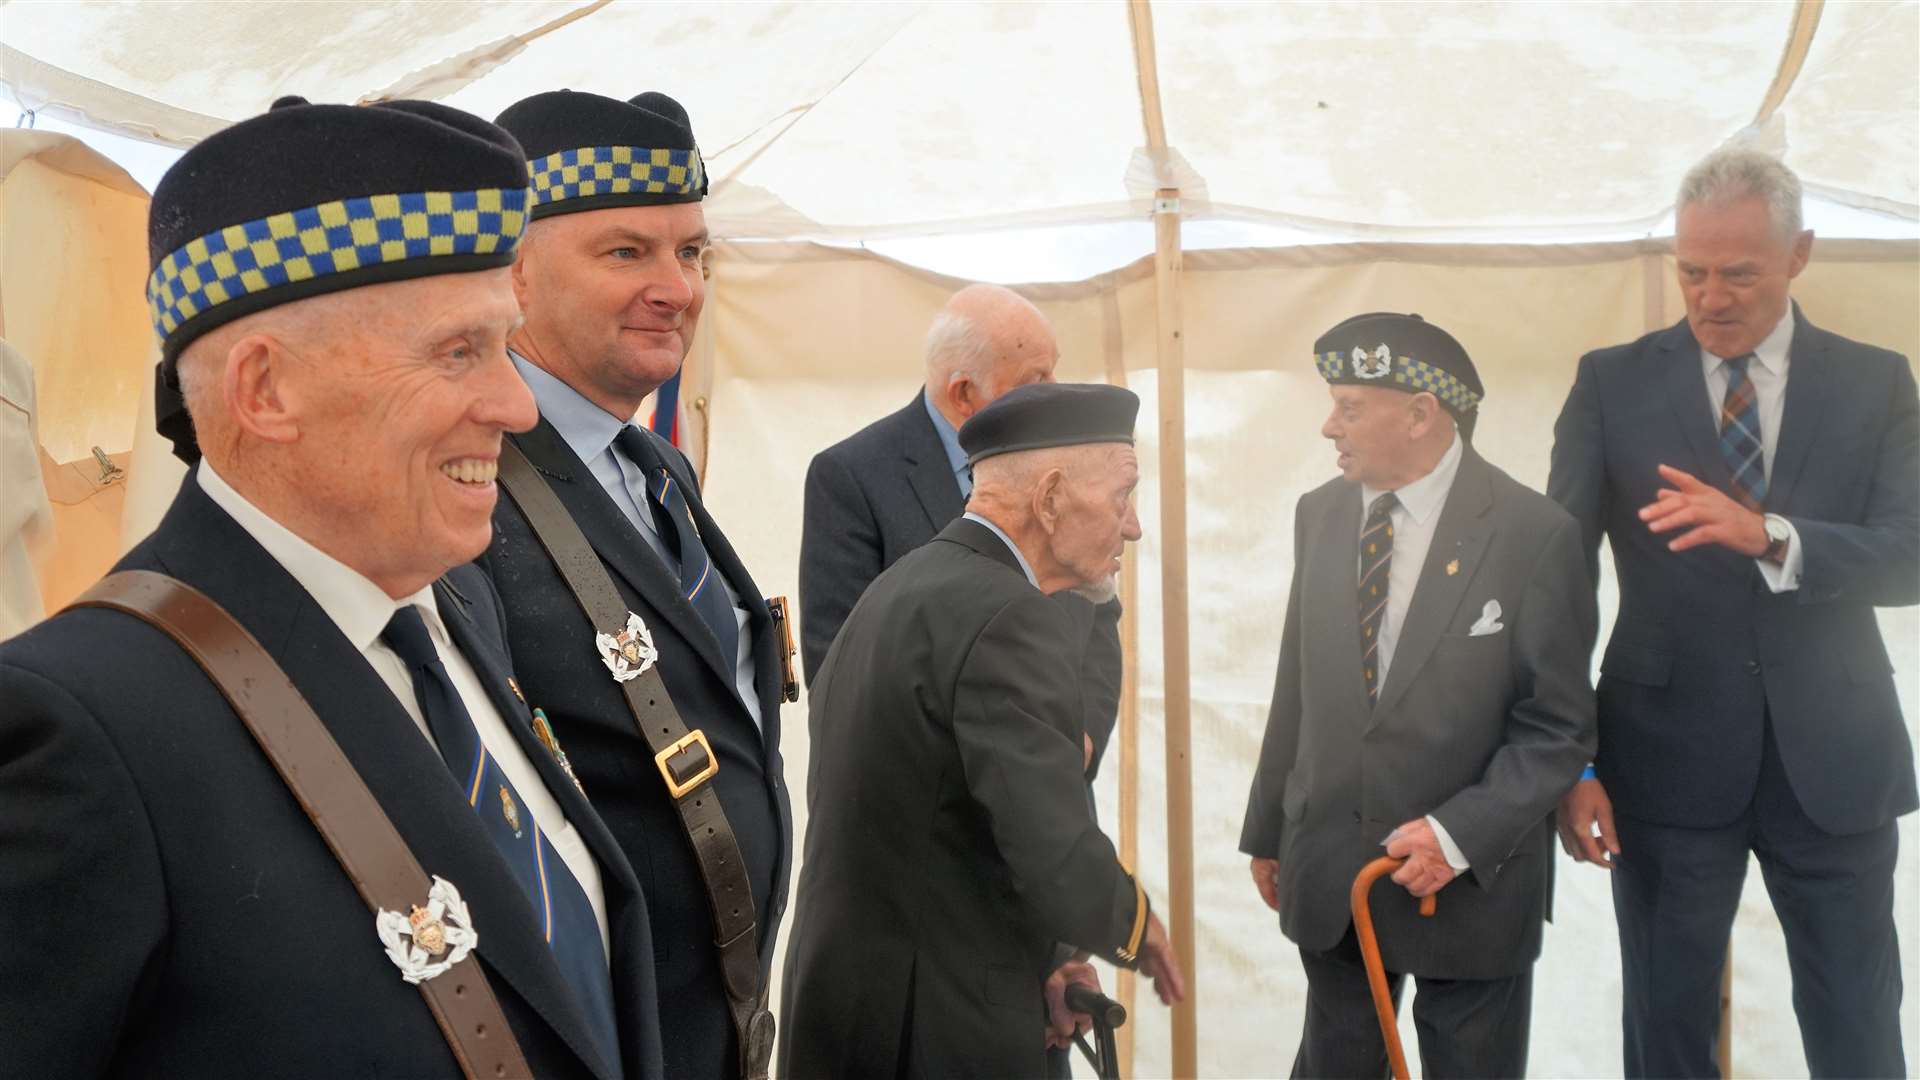 Veterans inside the royal tent. Picture: DGS